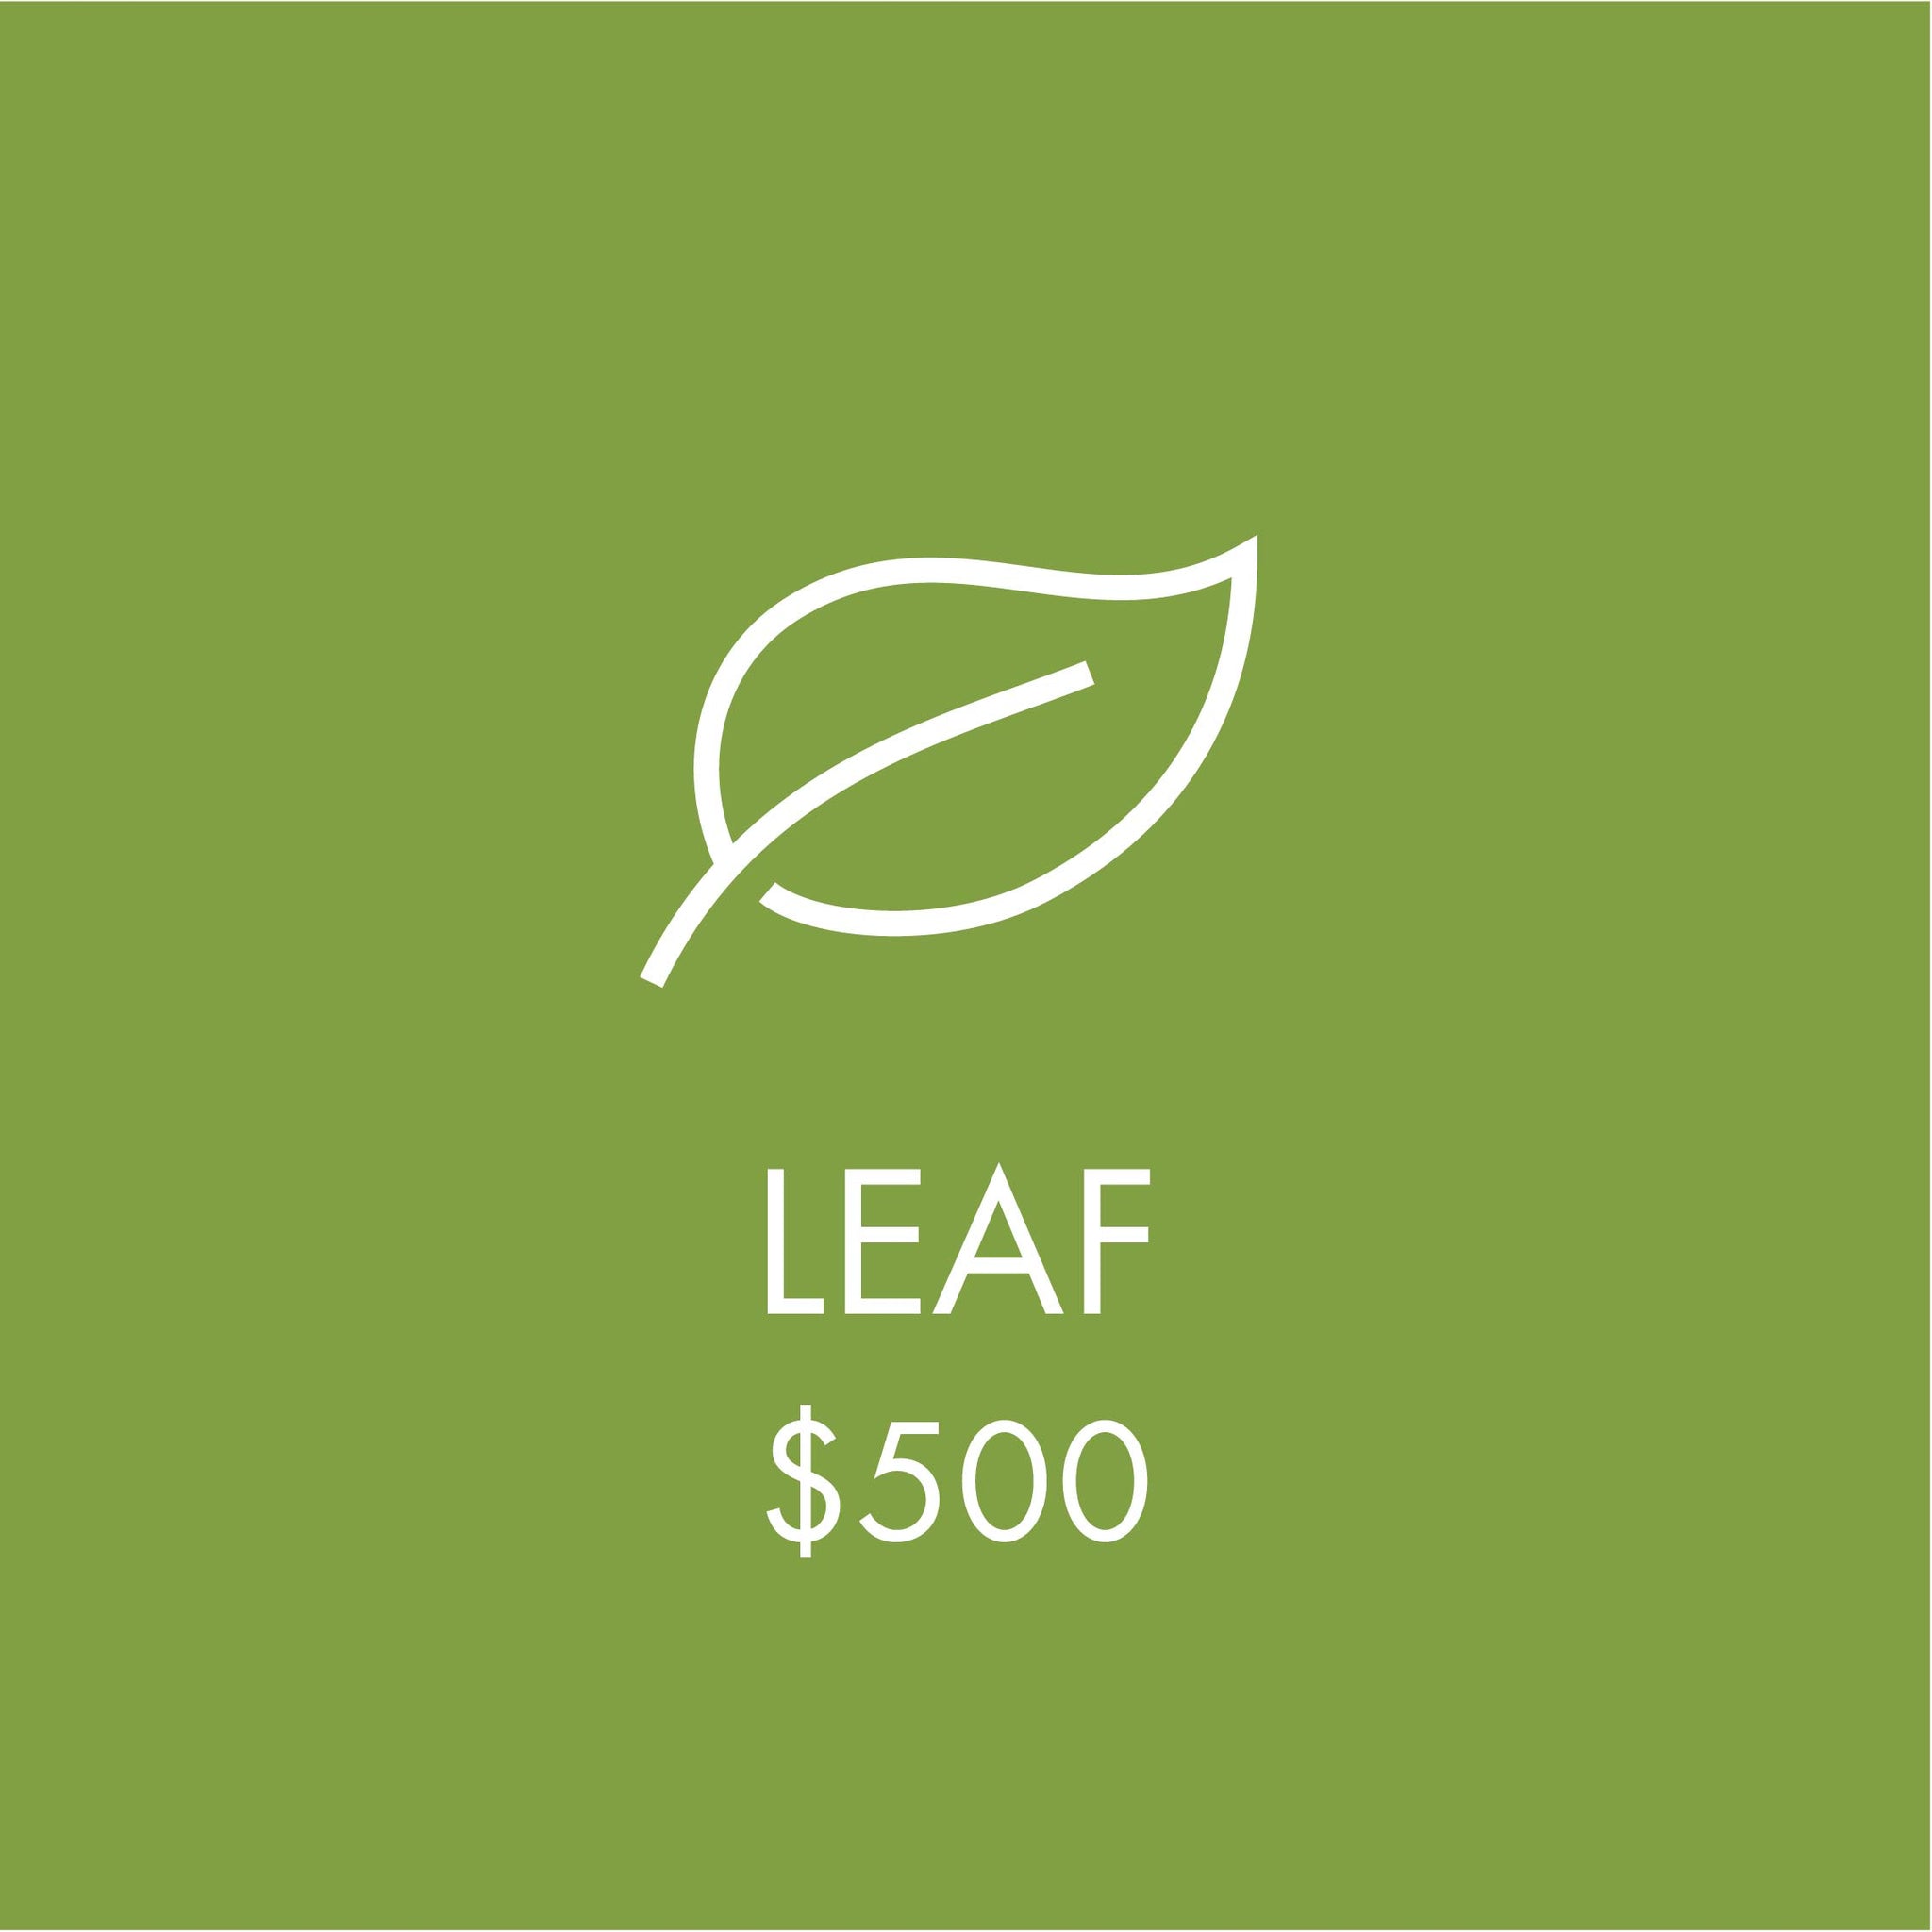 Support LongHouse - Leaf $500